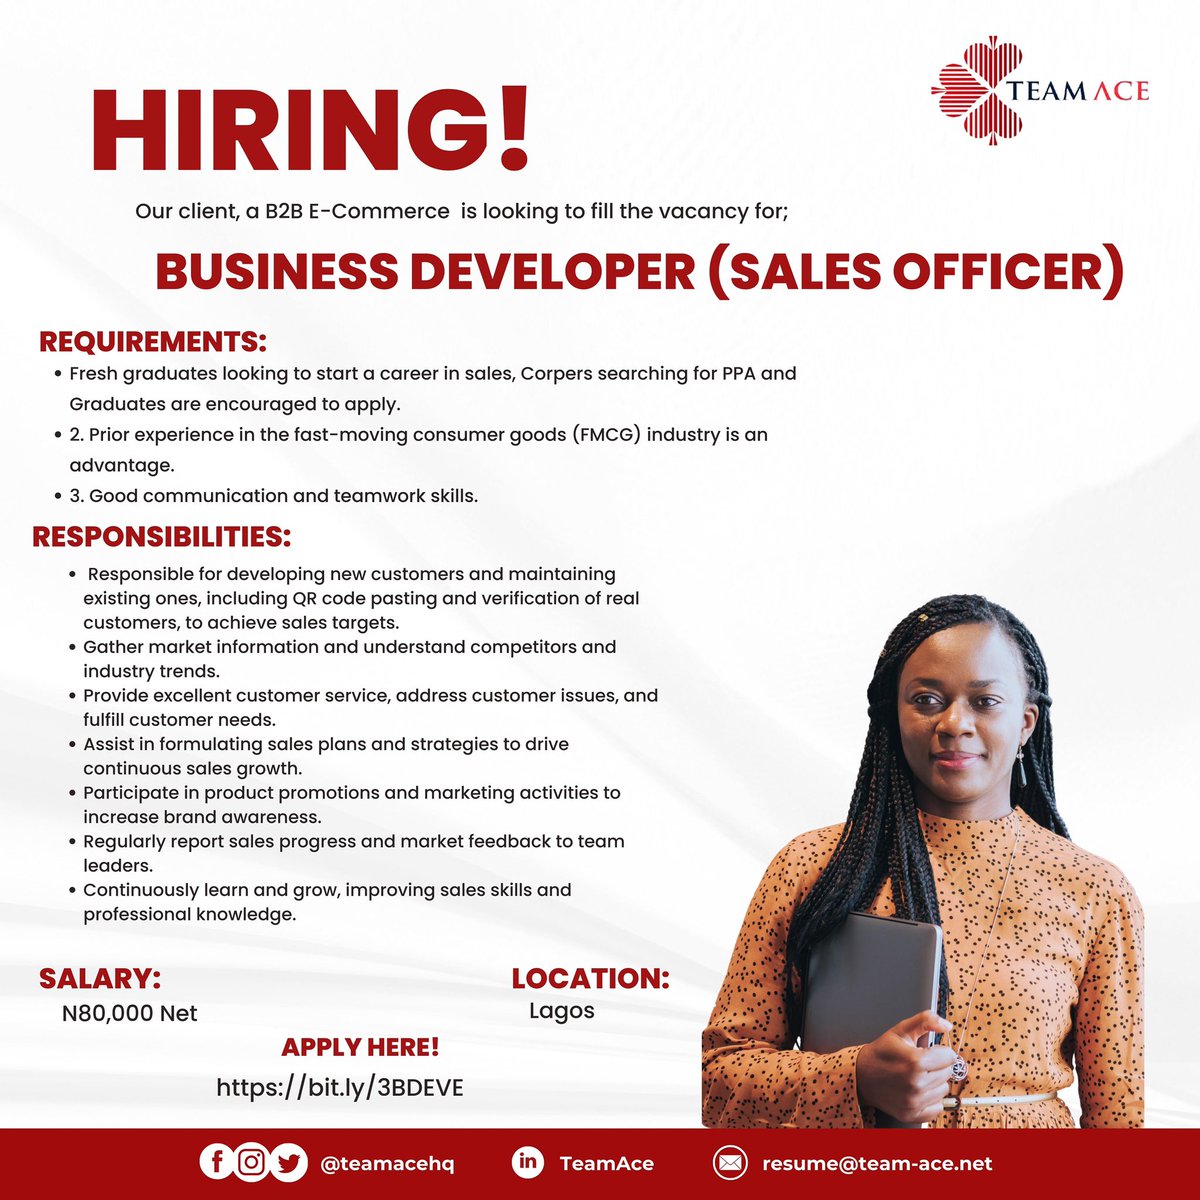 JOB OPENING!!
See flier for details 

Apply here👇🏽👇🏽
bit.ly/3BDEVE

#jobopening #jobopportunity #snapchat #businessdeveloper #AUSvENG #hiring #vacancy  #recruitment  #jobsinlagos #remotejobs